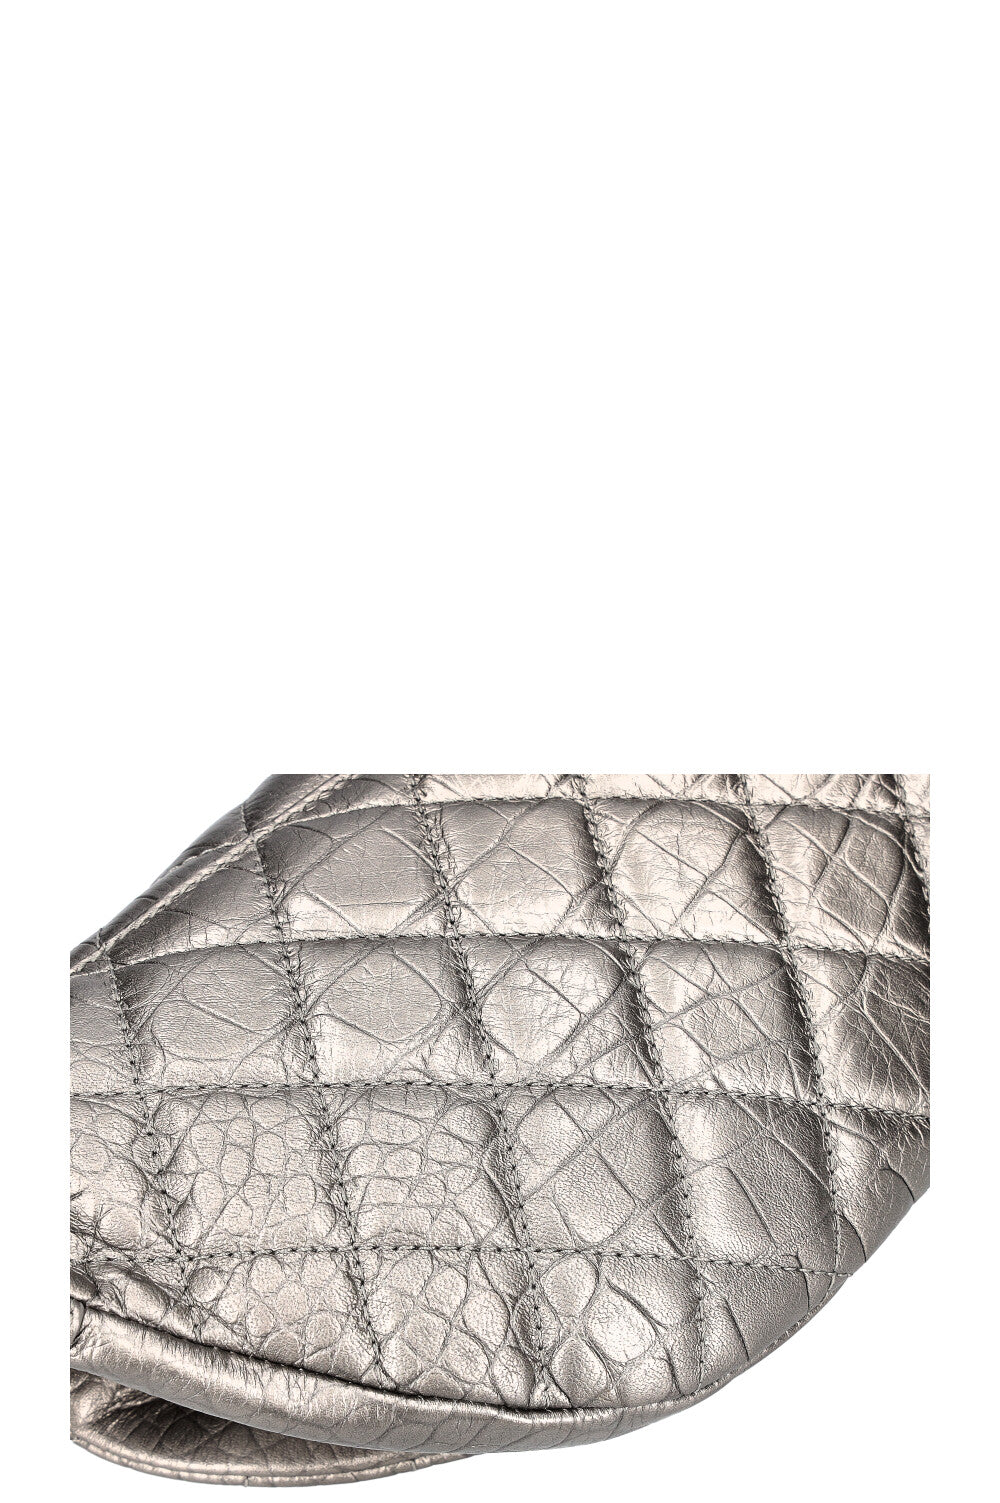 CHANEL Belt Bag Croc Embossed Metallic Silver